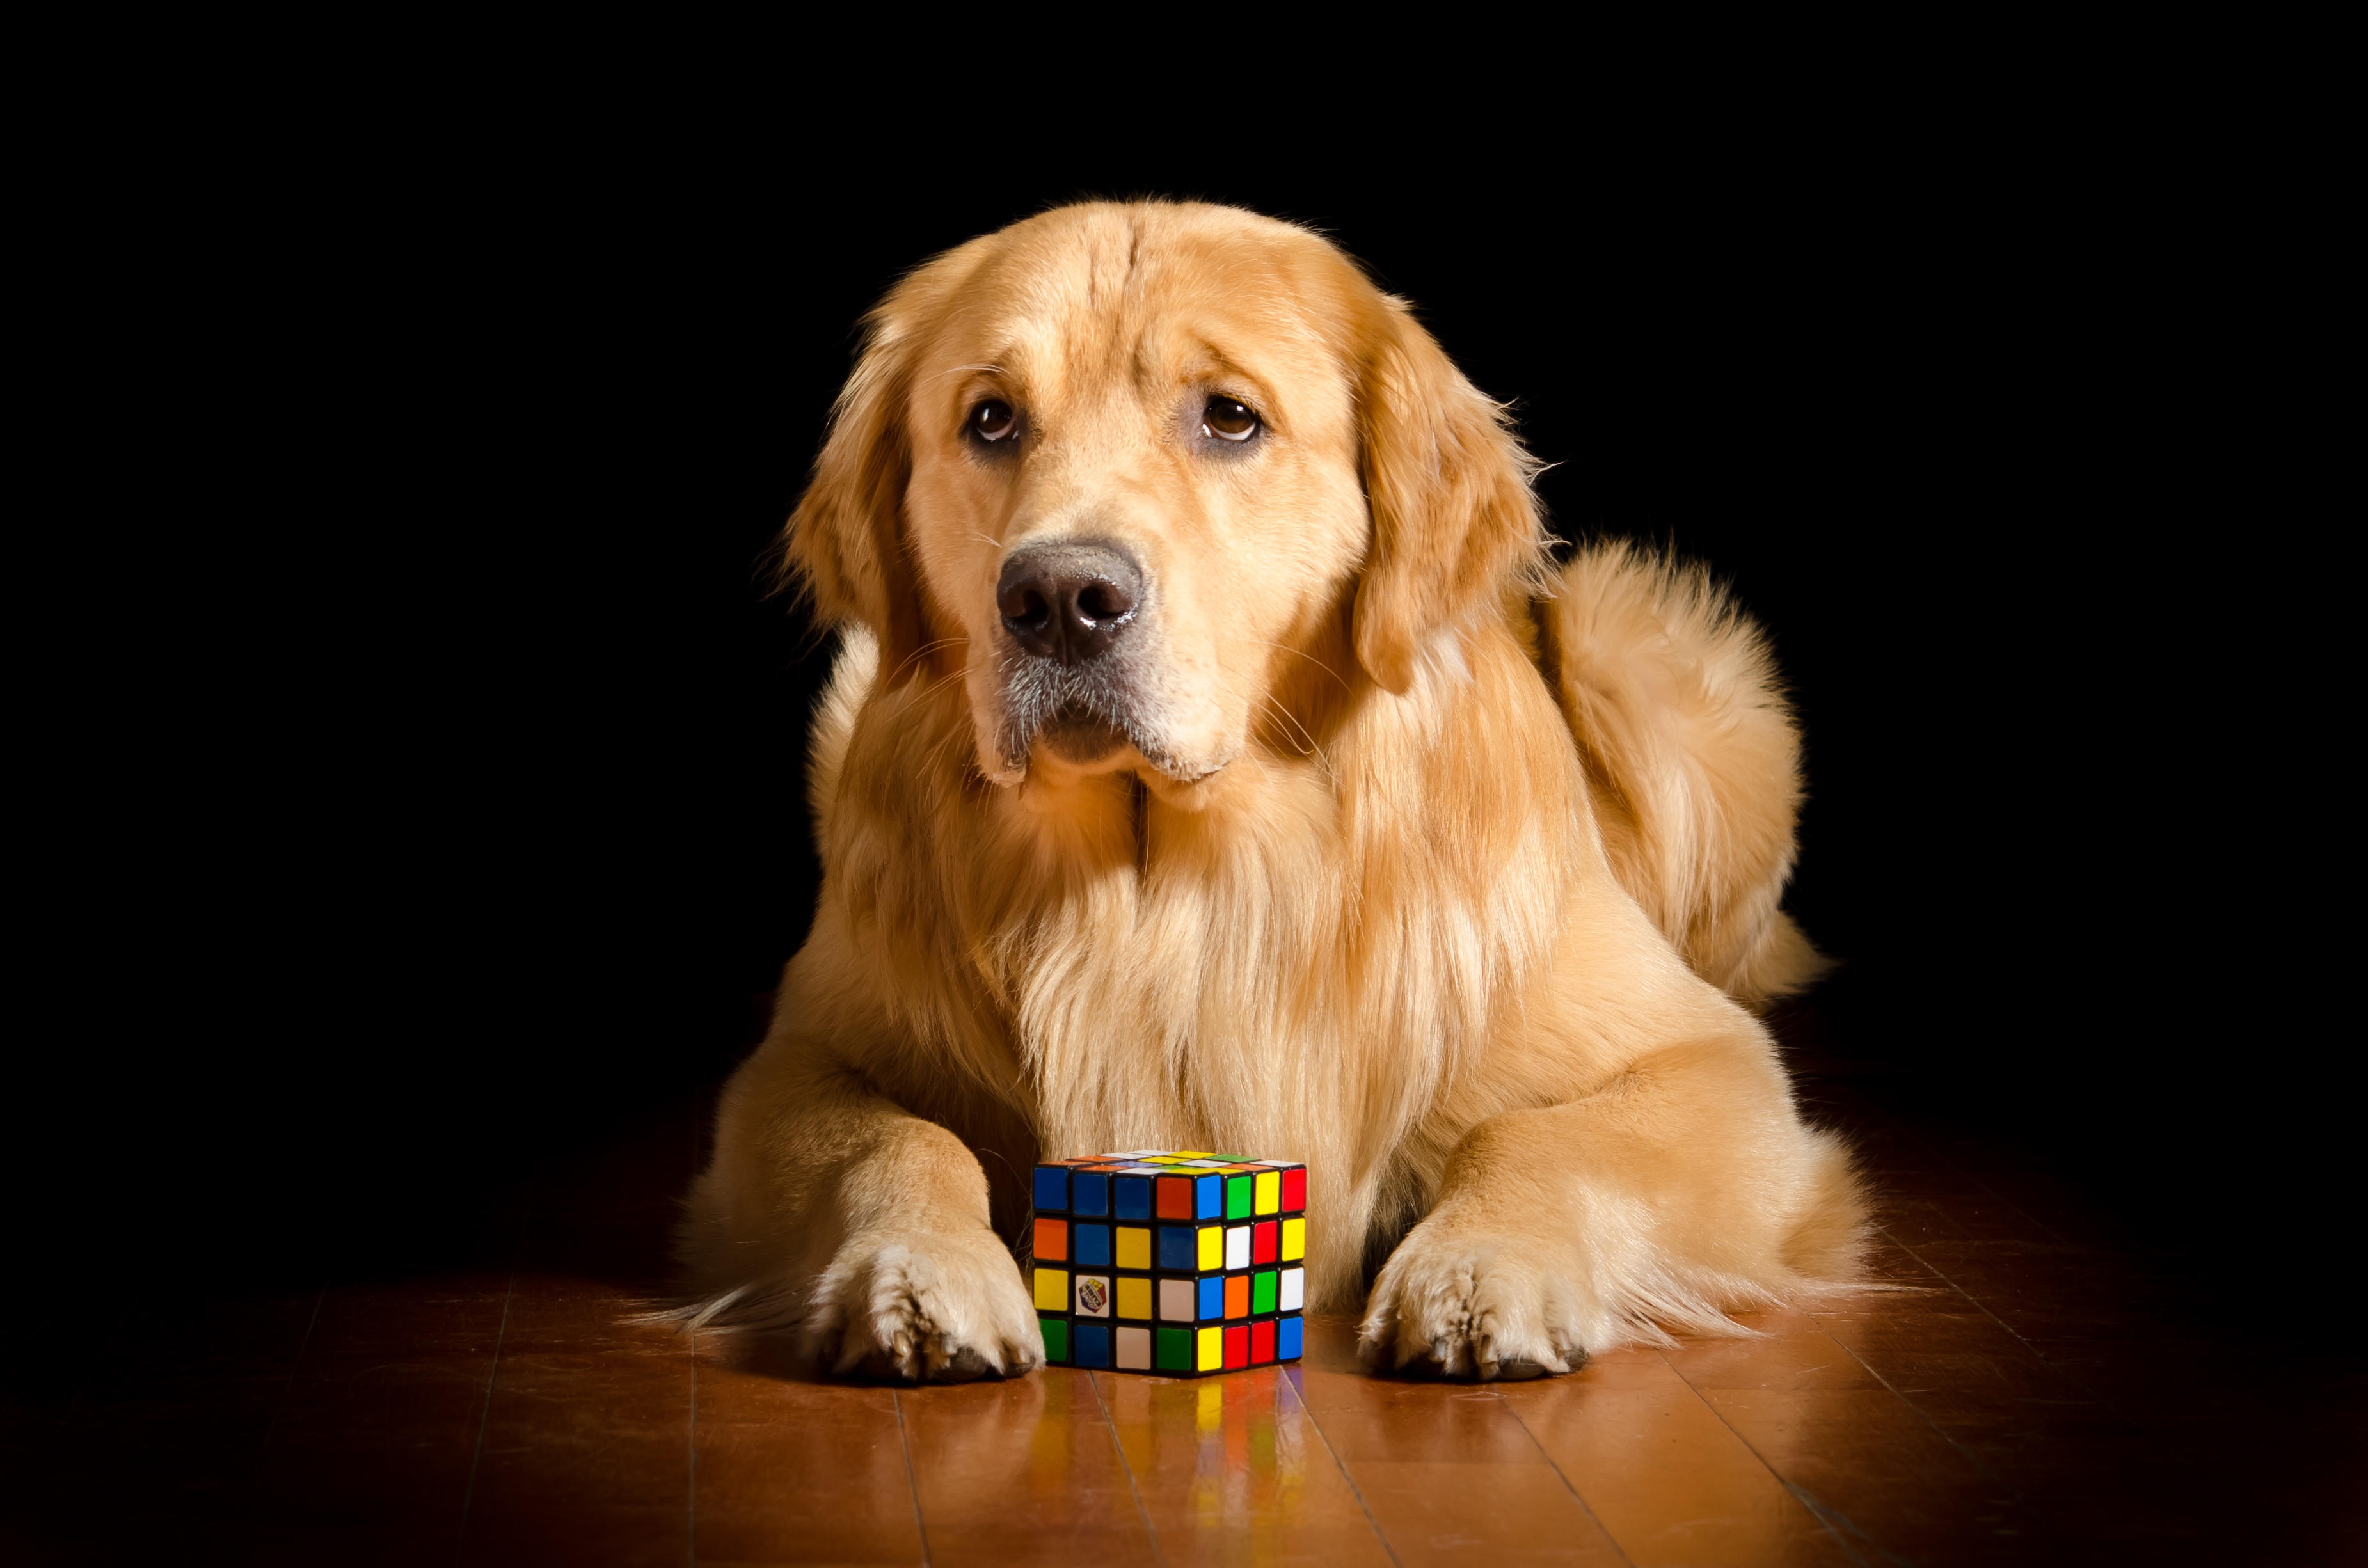 rubik's cube, animal, golden retriever, dog, dogs